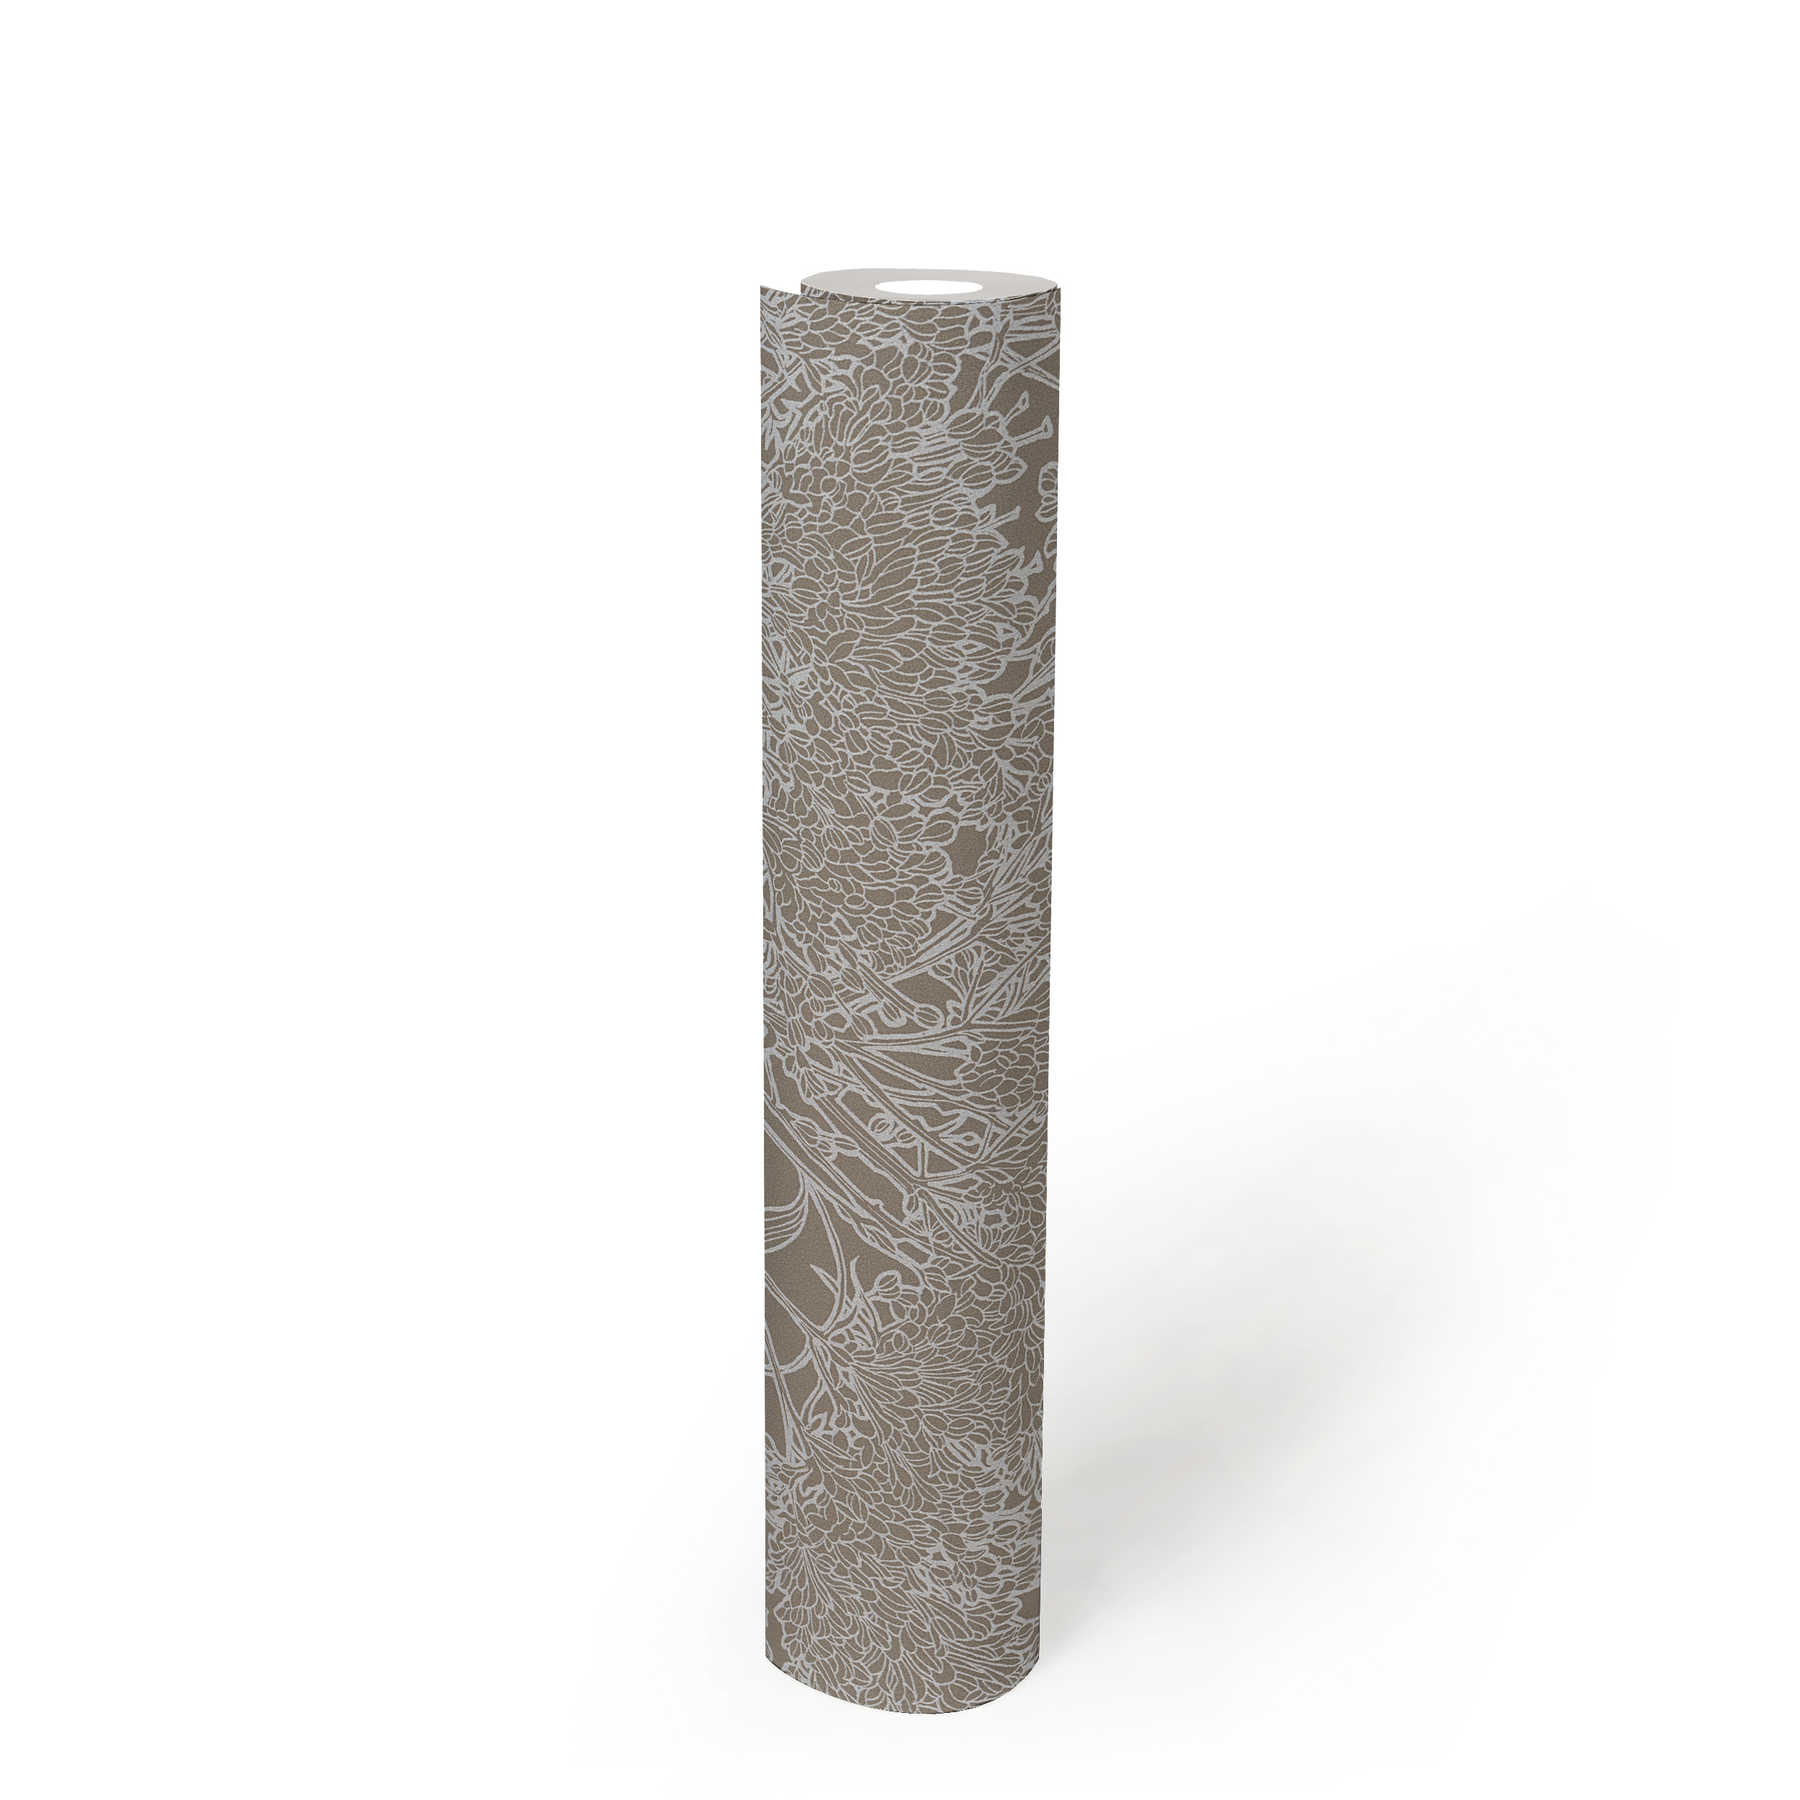             Blumentapete in Grau mit Silber Metallic Effekt – Grau, Silber
        